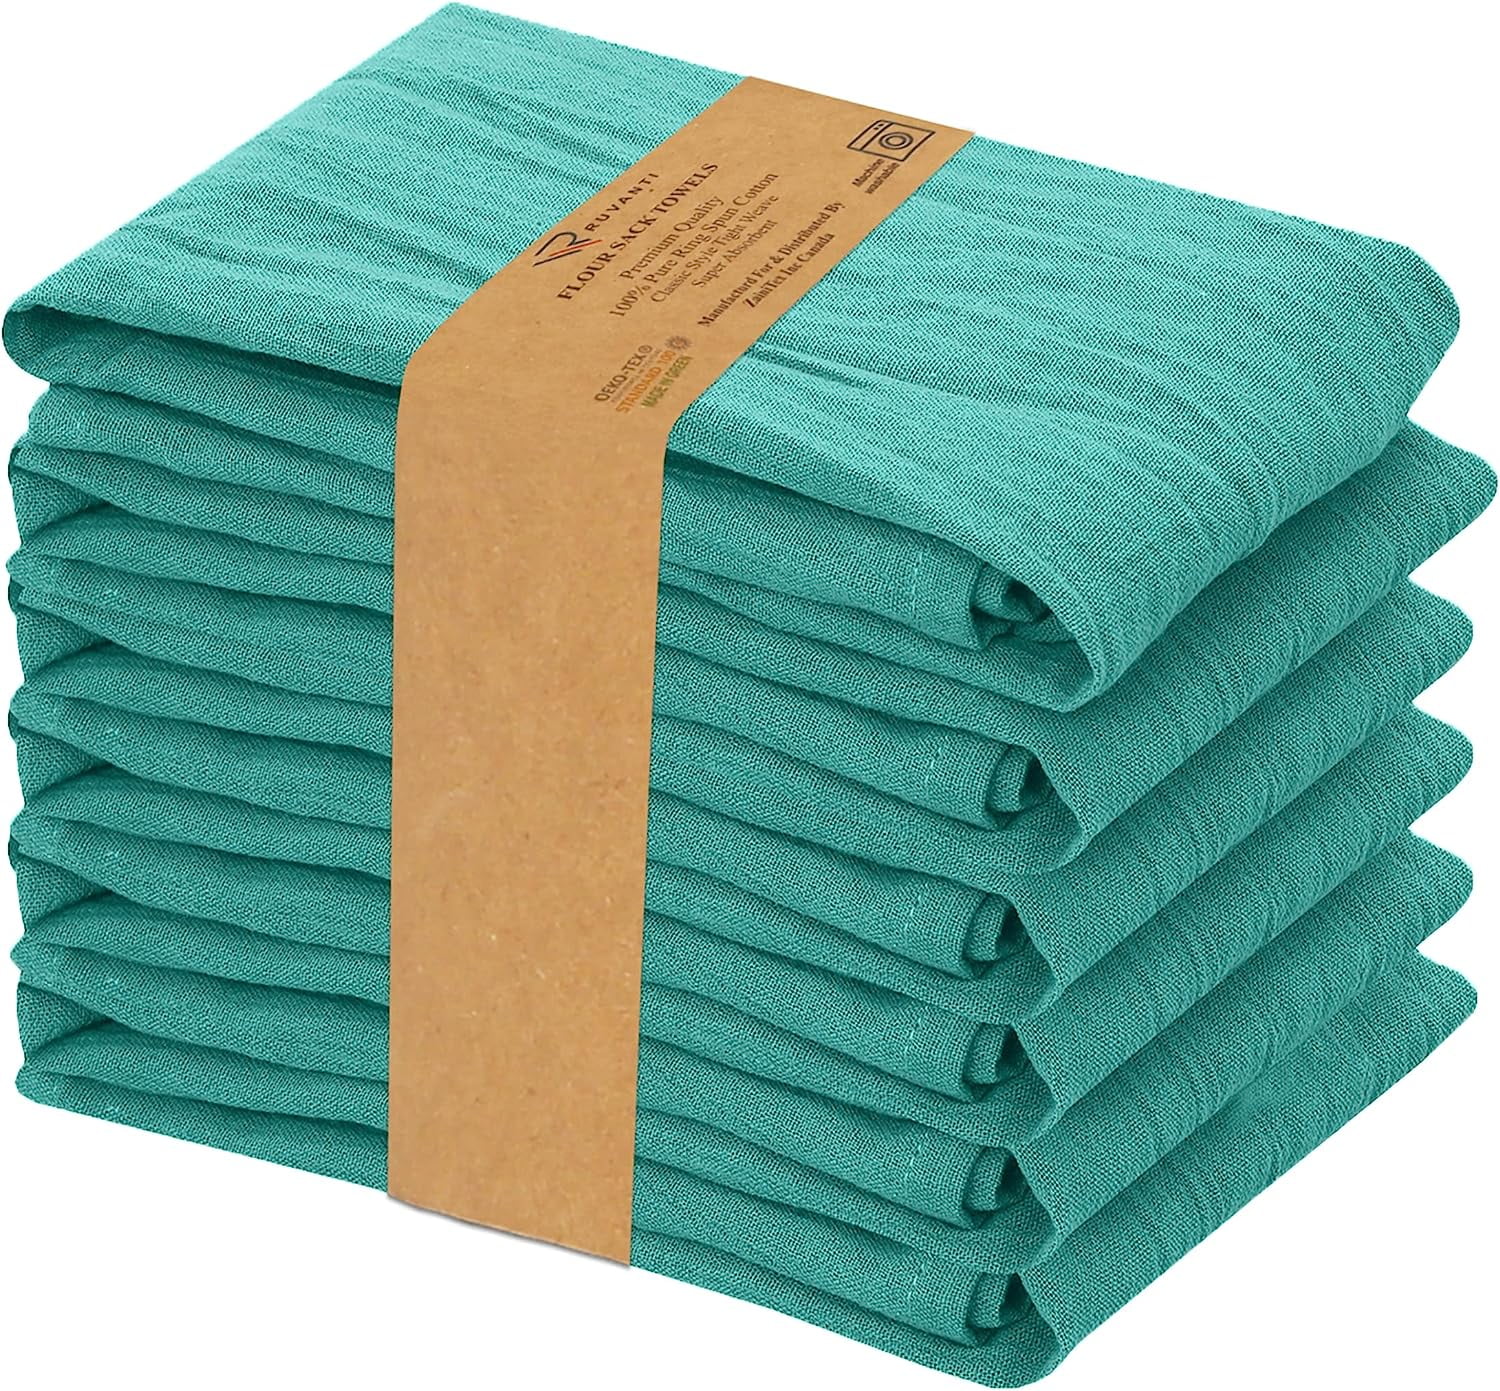 Everything Worth Preserving Flour Sack Towel Set - 2 Towels